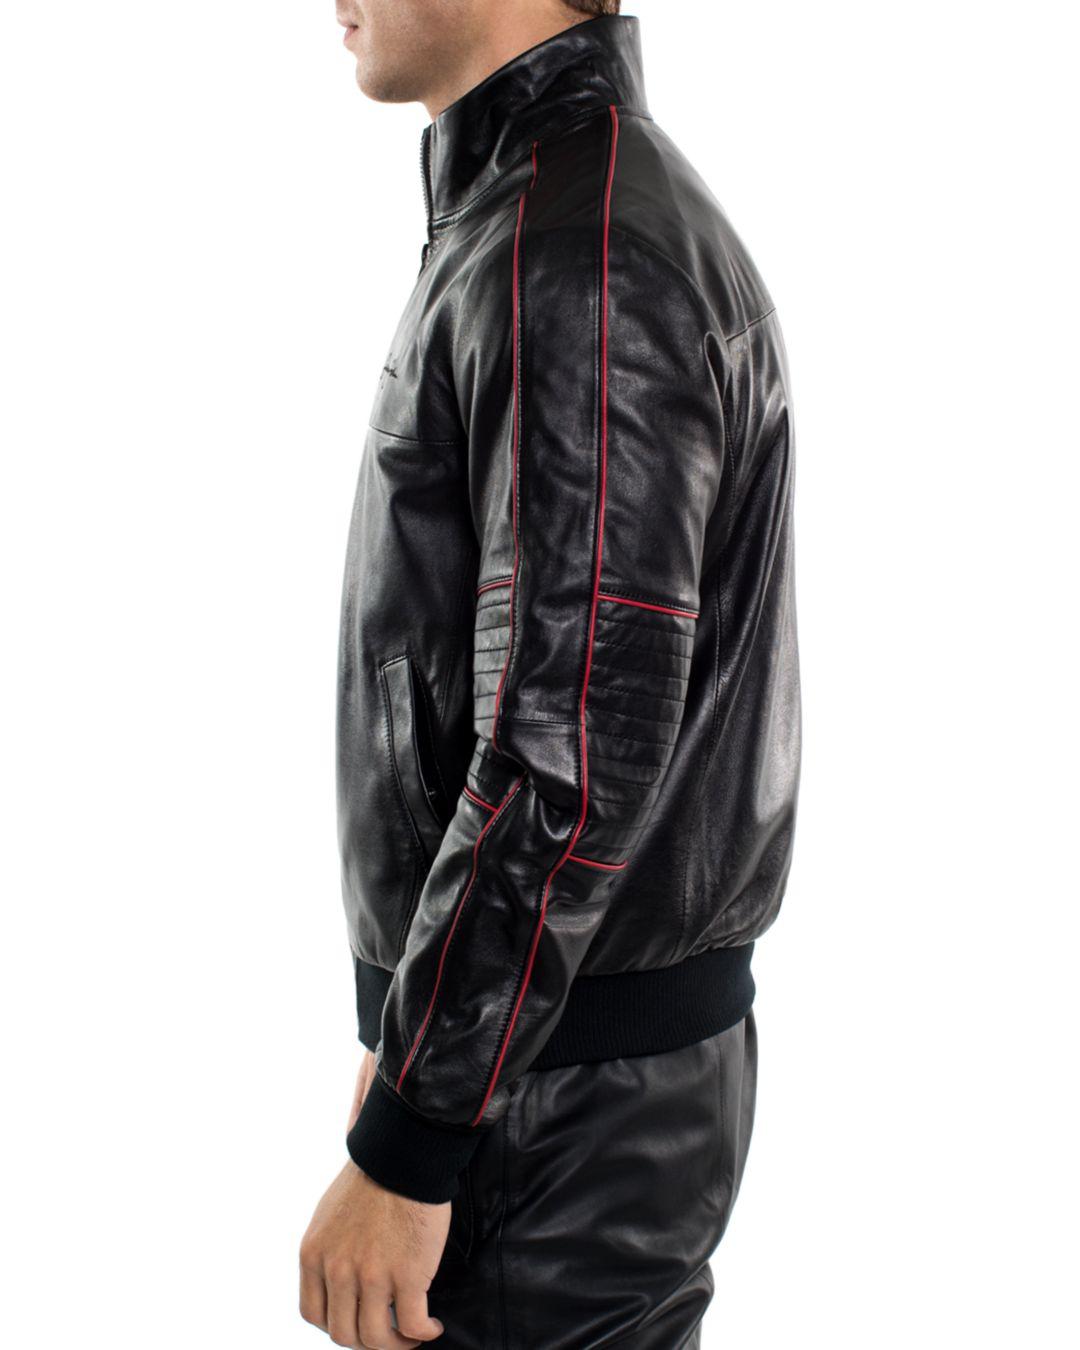 Sean John Leather Bomber Jacket in Black for Men - Lyst